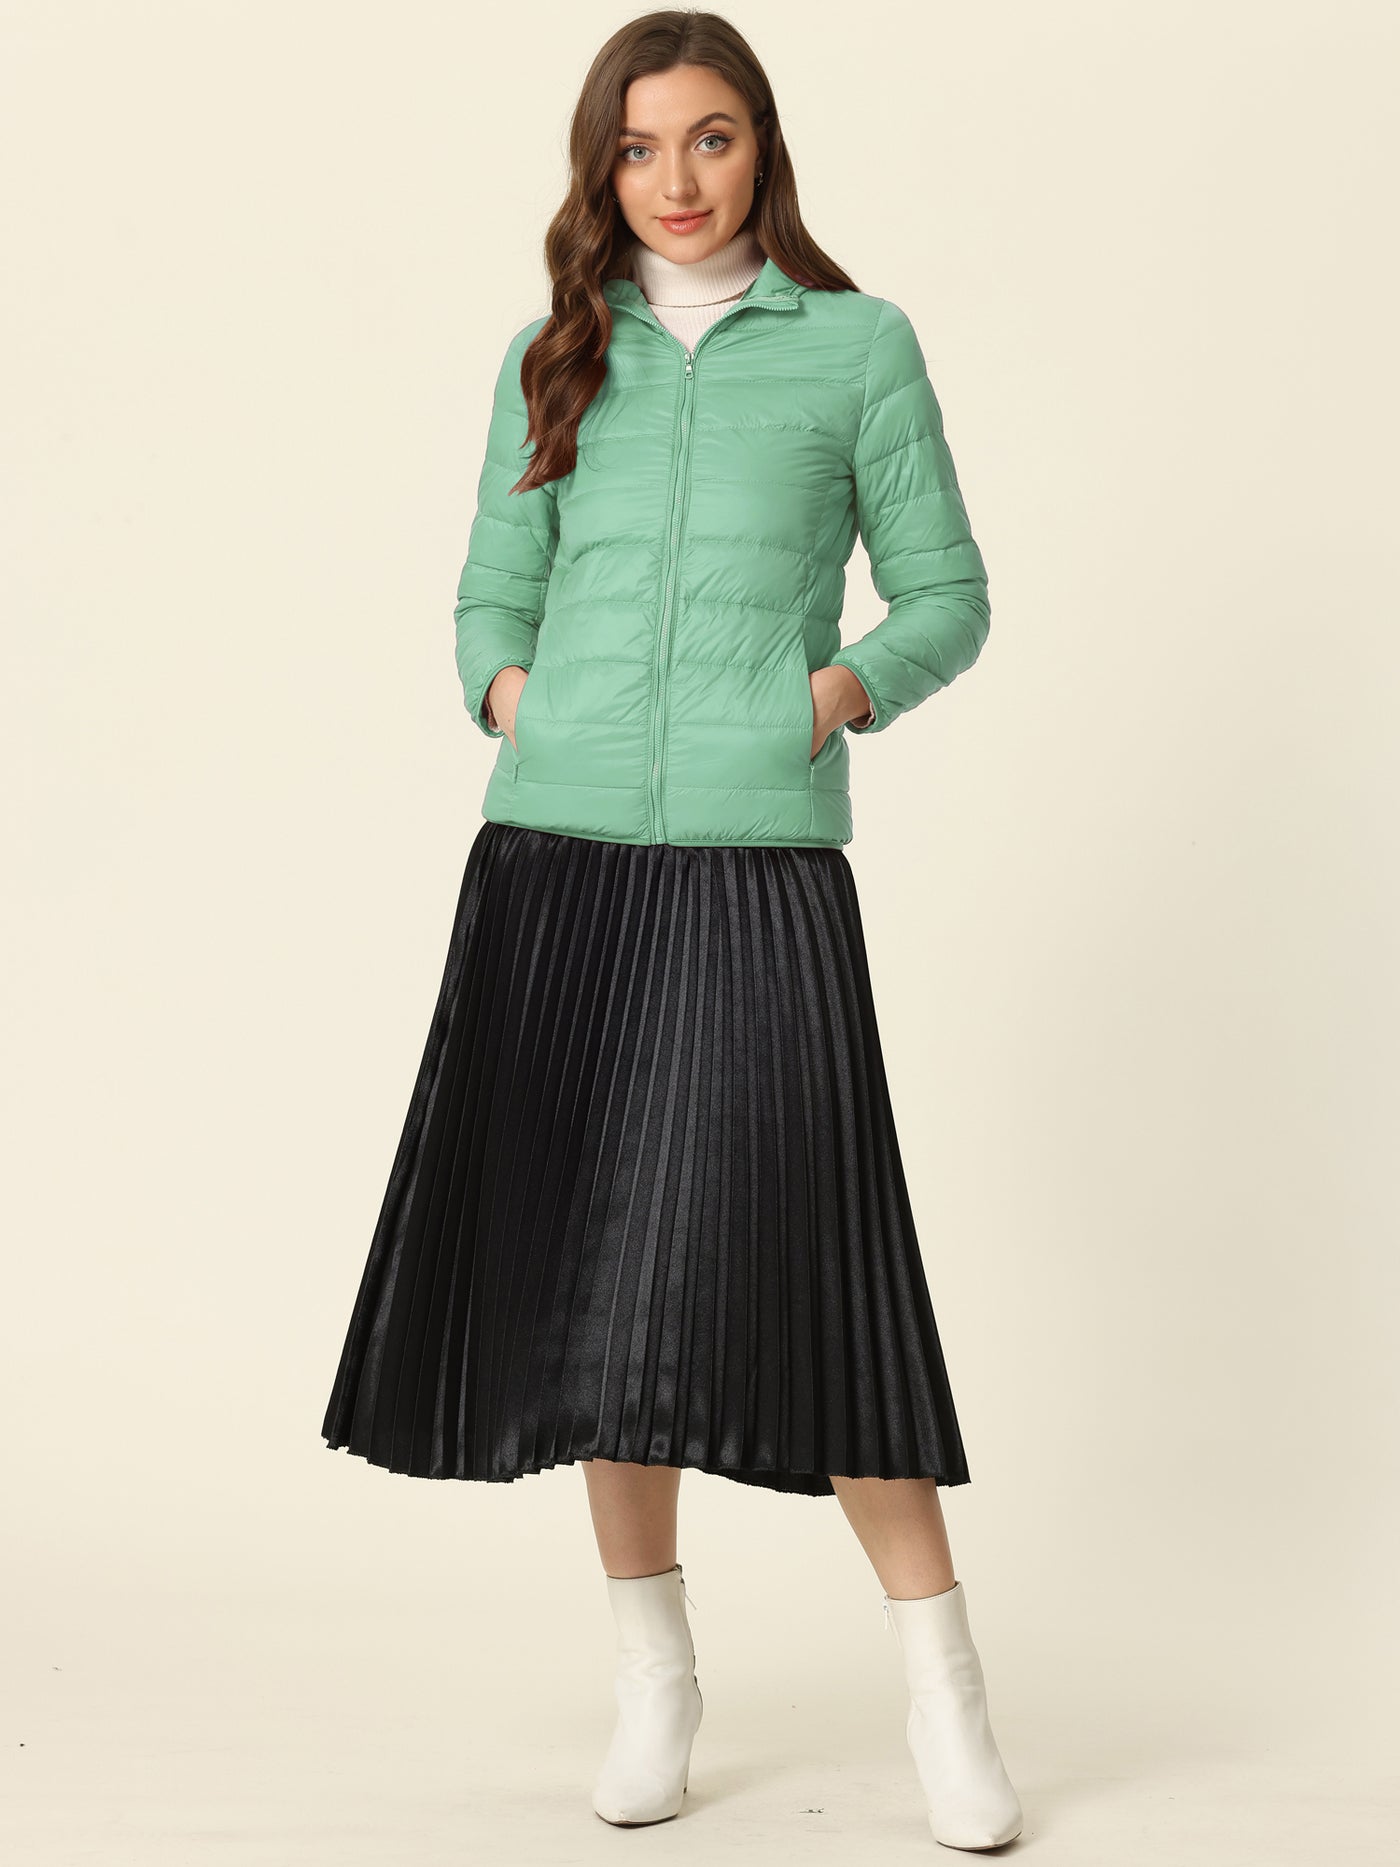 Allegra K Hooded Packable Long Sleeve Zip Up Down Winter Lightweight Jacket